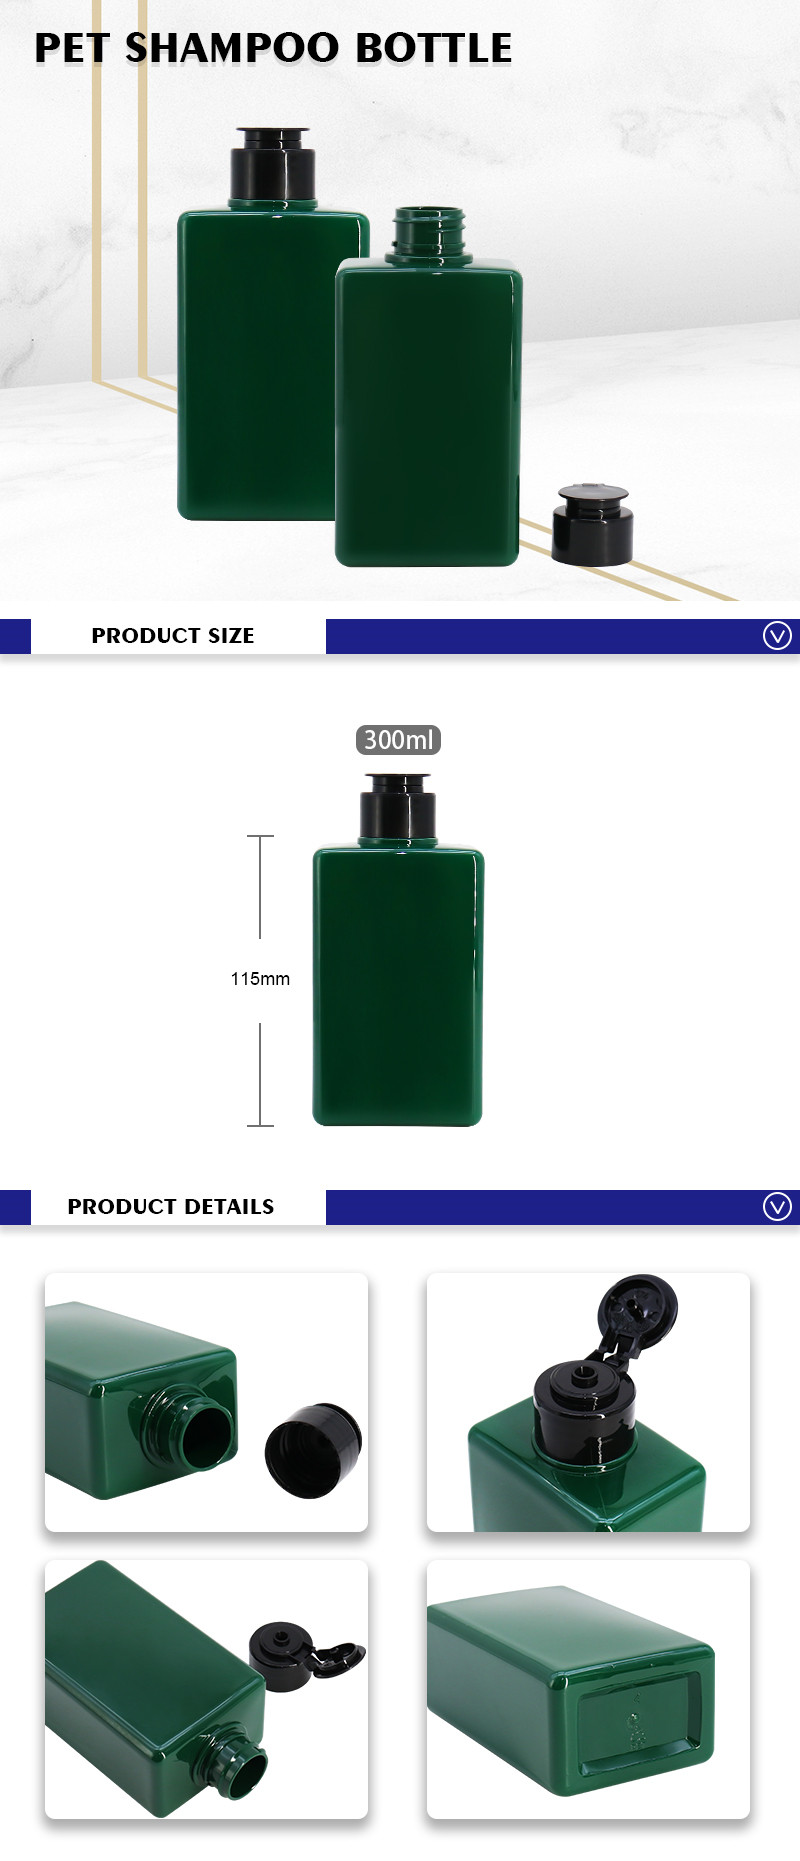 The Green Square Shampoo Bottle